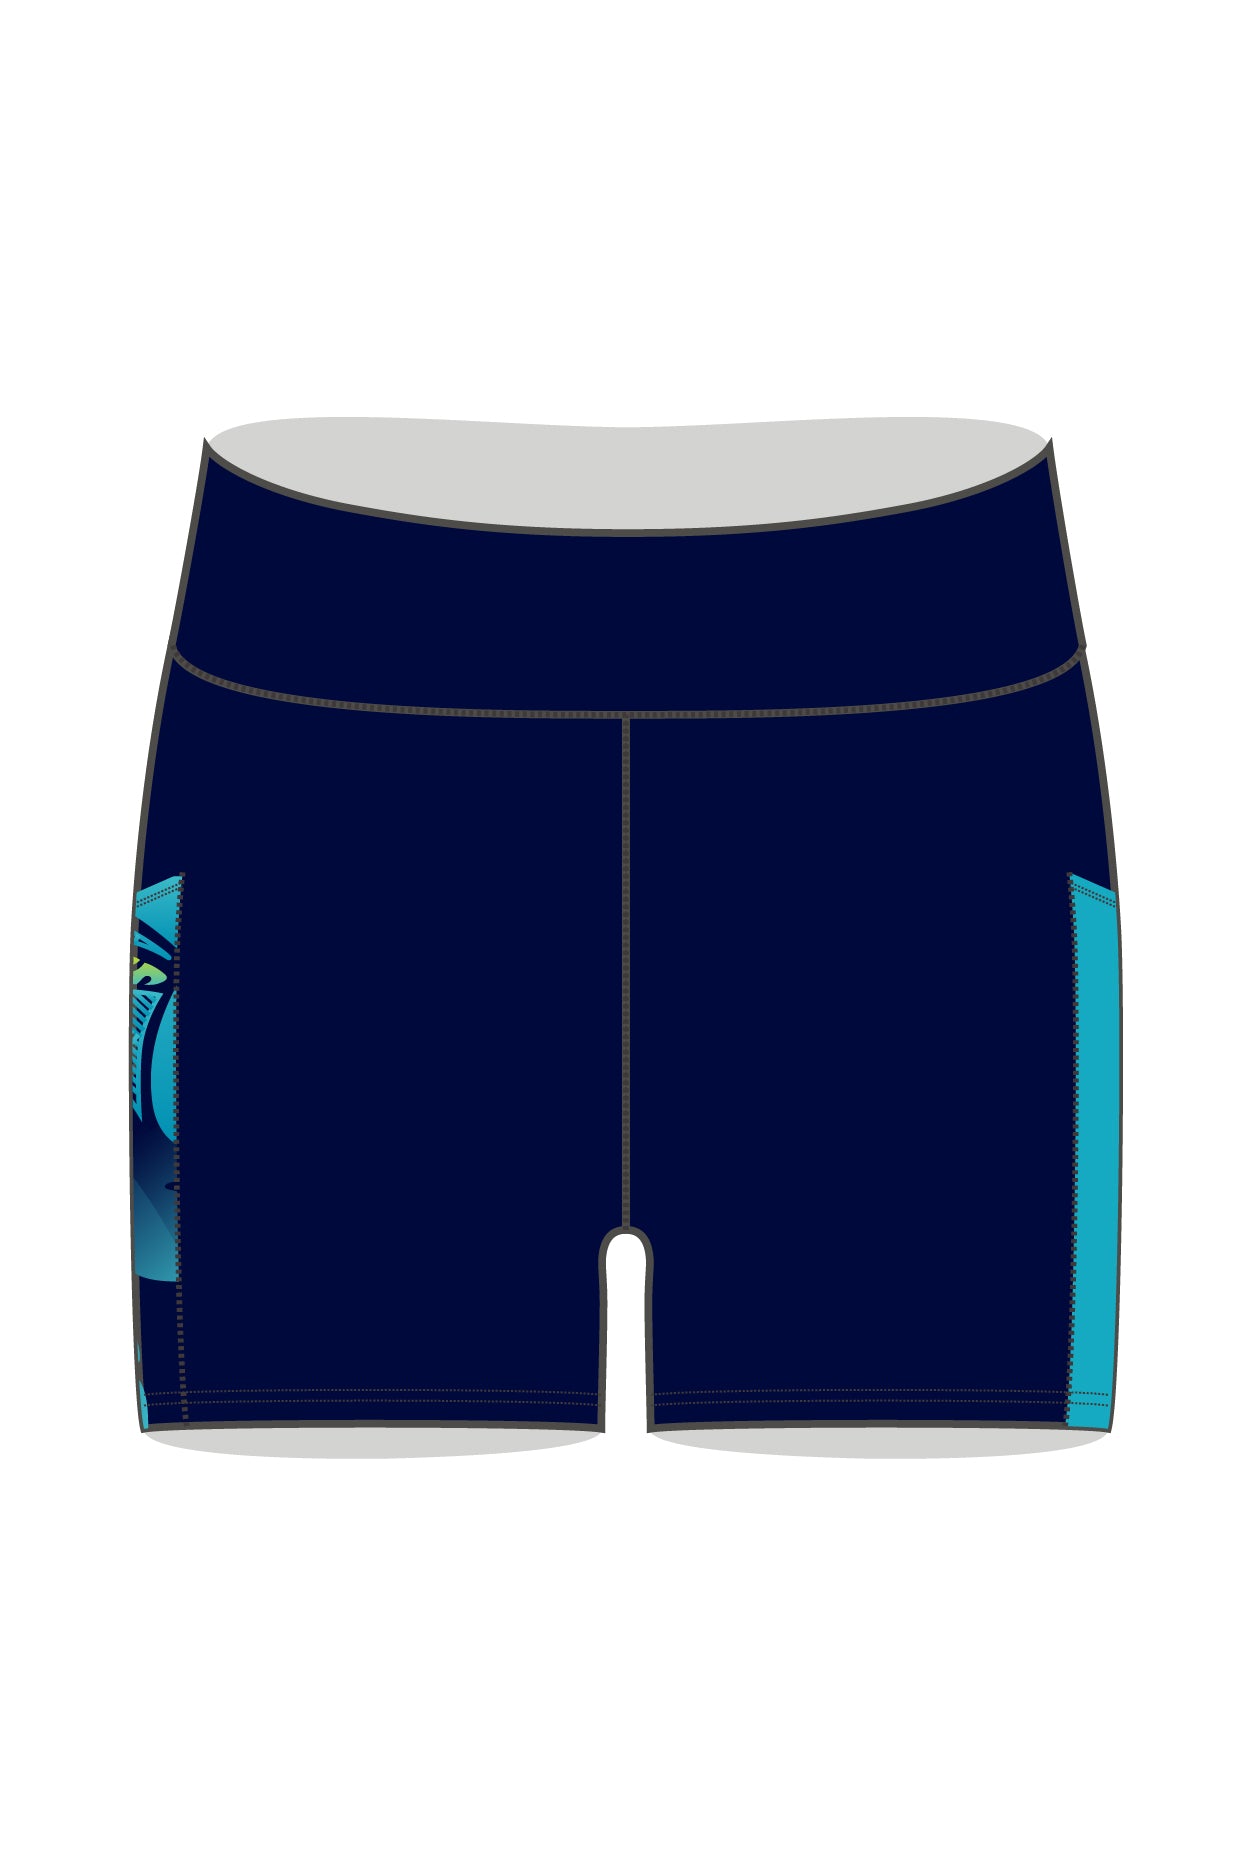 Townsville Tri Club Mid-Thigh Shorts